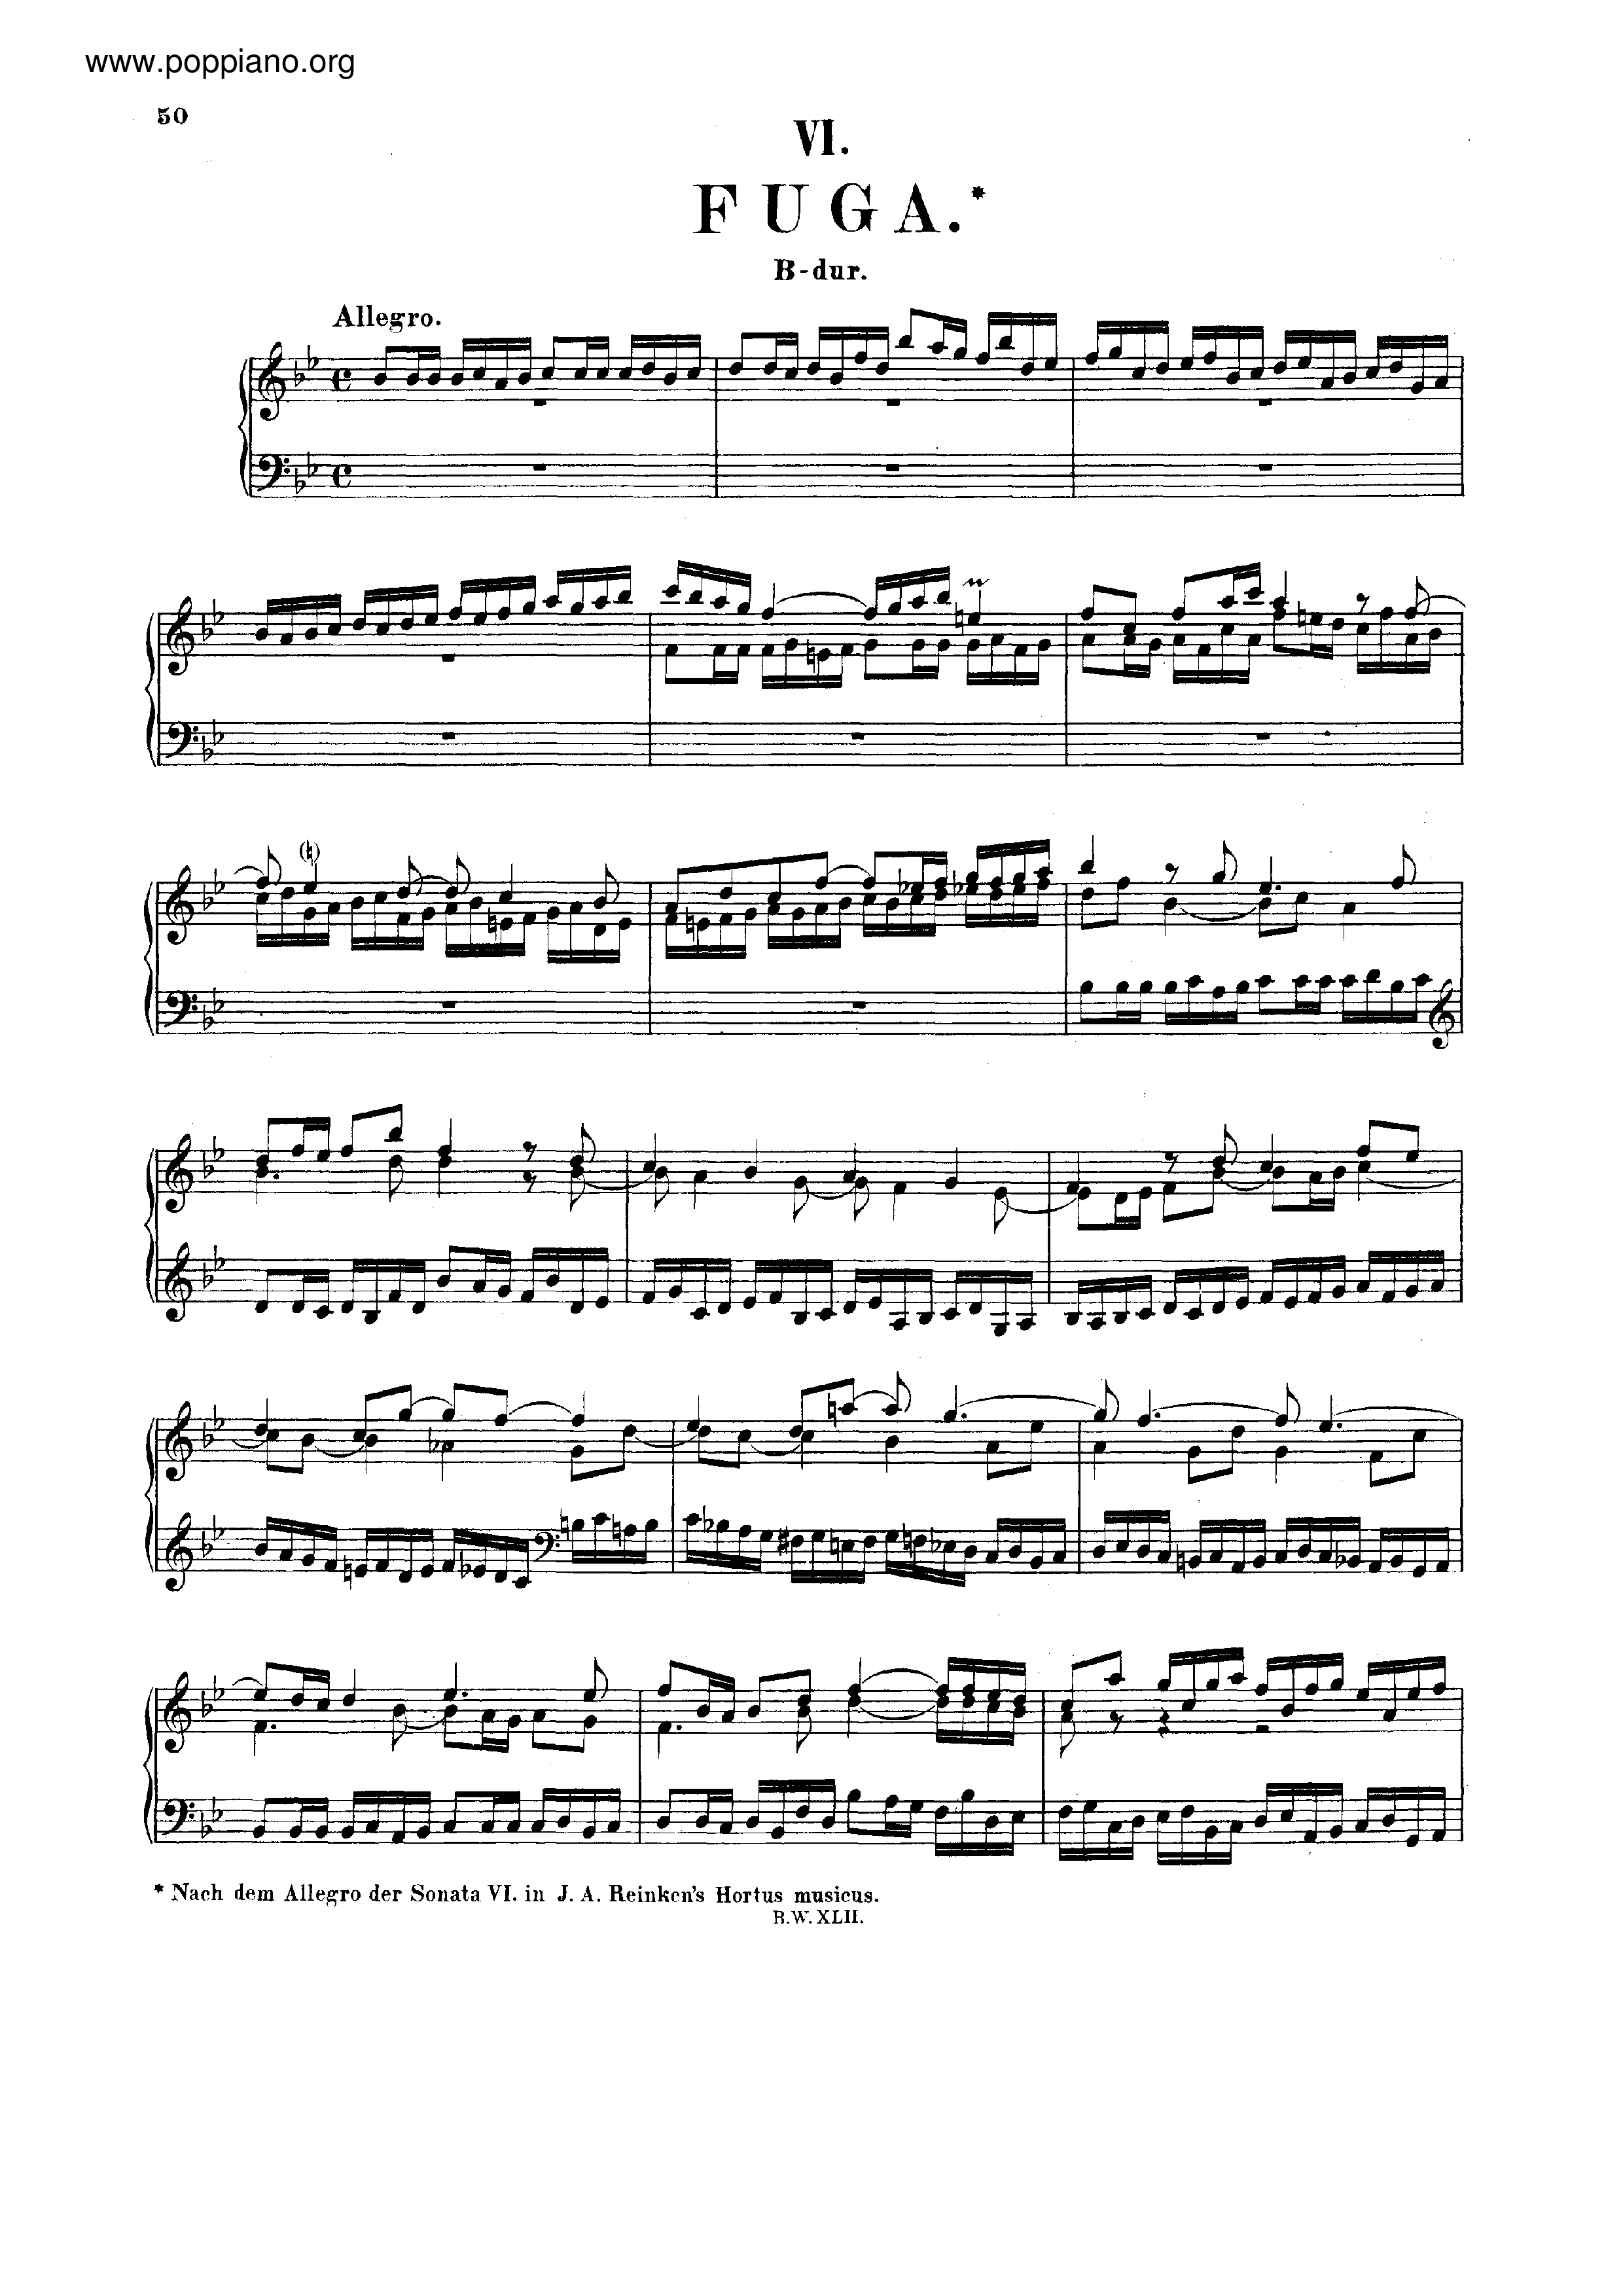 Fugue in B-flat major, BWV 954琴譜